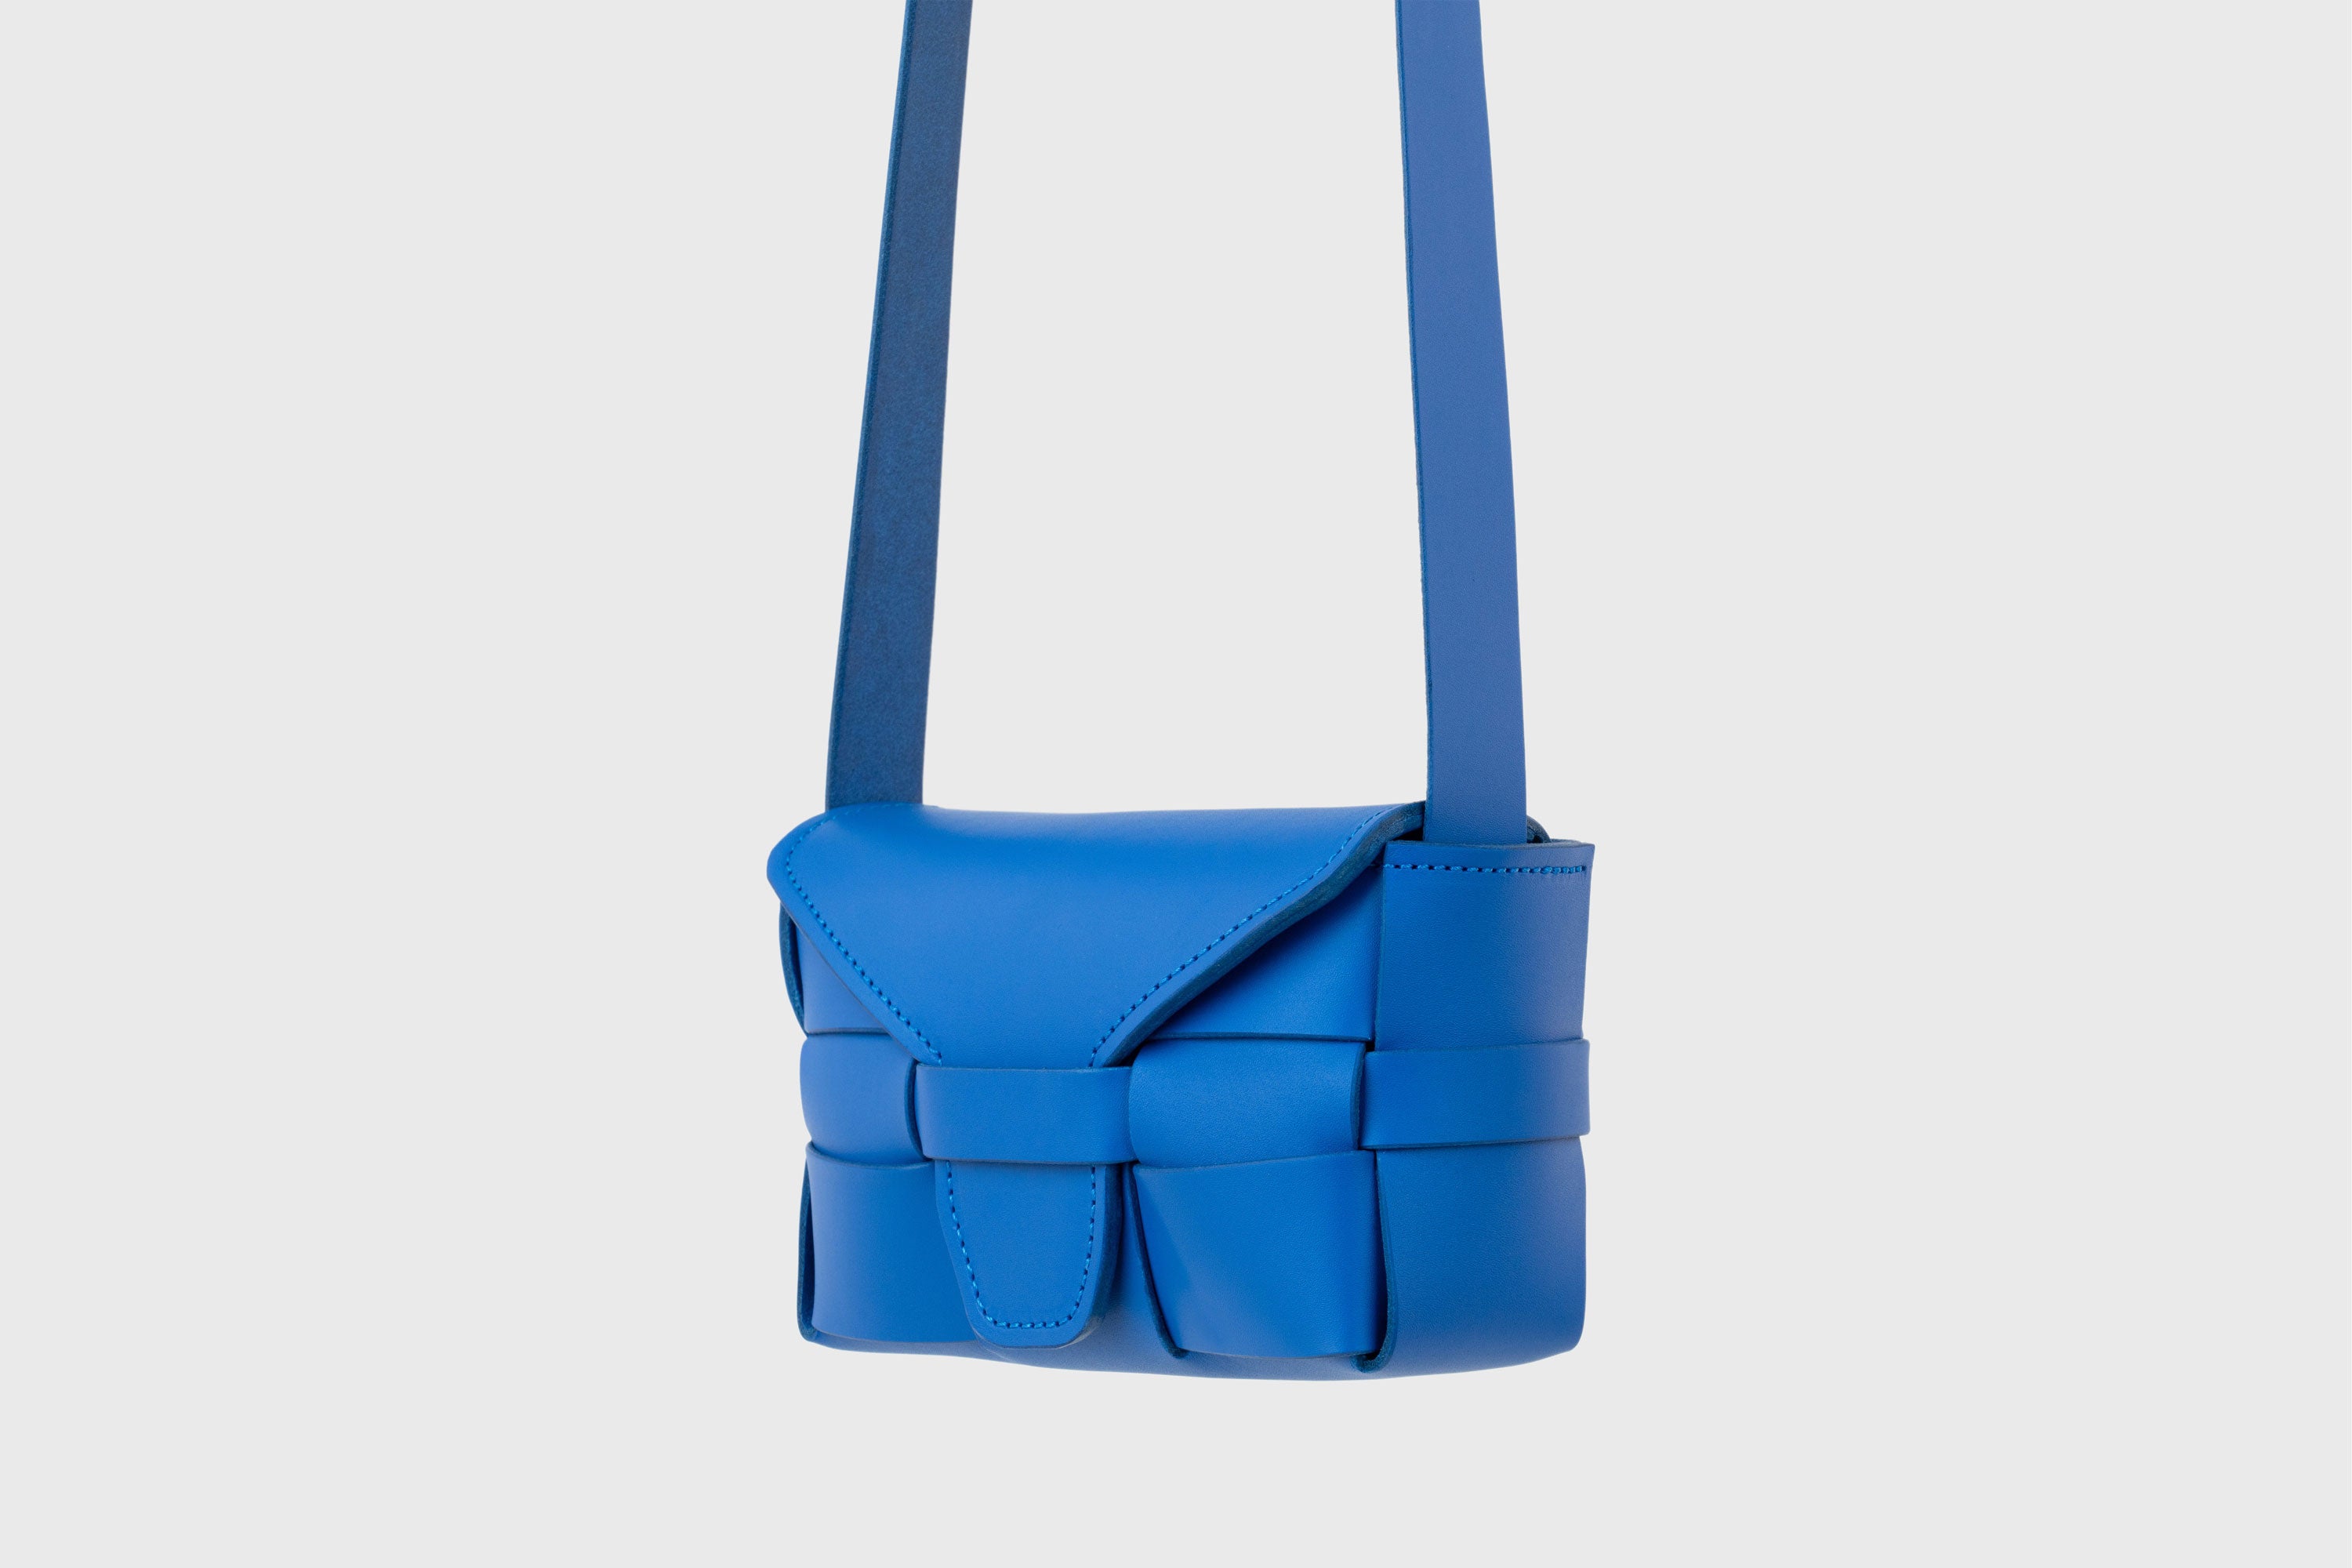 Woven Leather Bag Saka Small Royal Blue Braided Shoulder Bag Crossbody Vegetable Tanned Premium Quality Modern Minimalistic Design Atelier Madre Manuel Dreesmann Barcelona